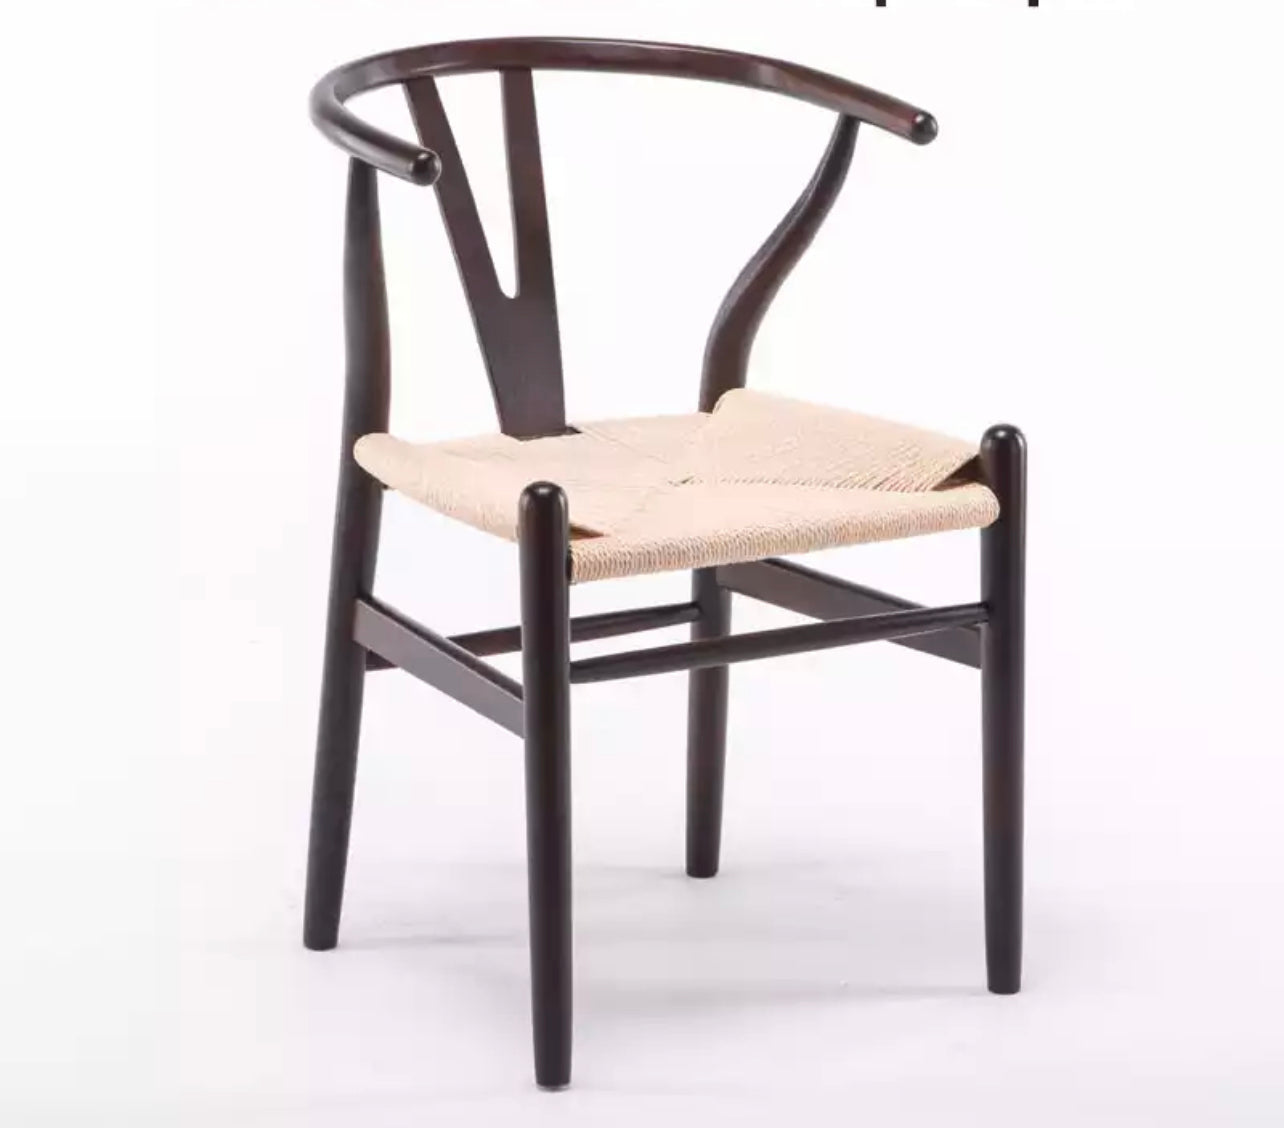 The Minimal chair